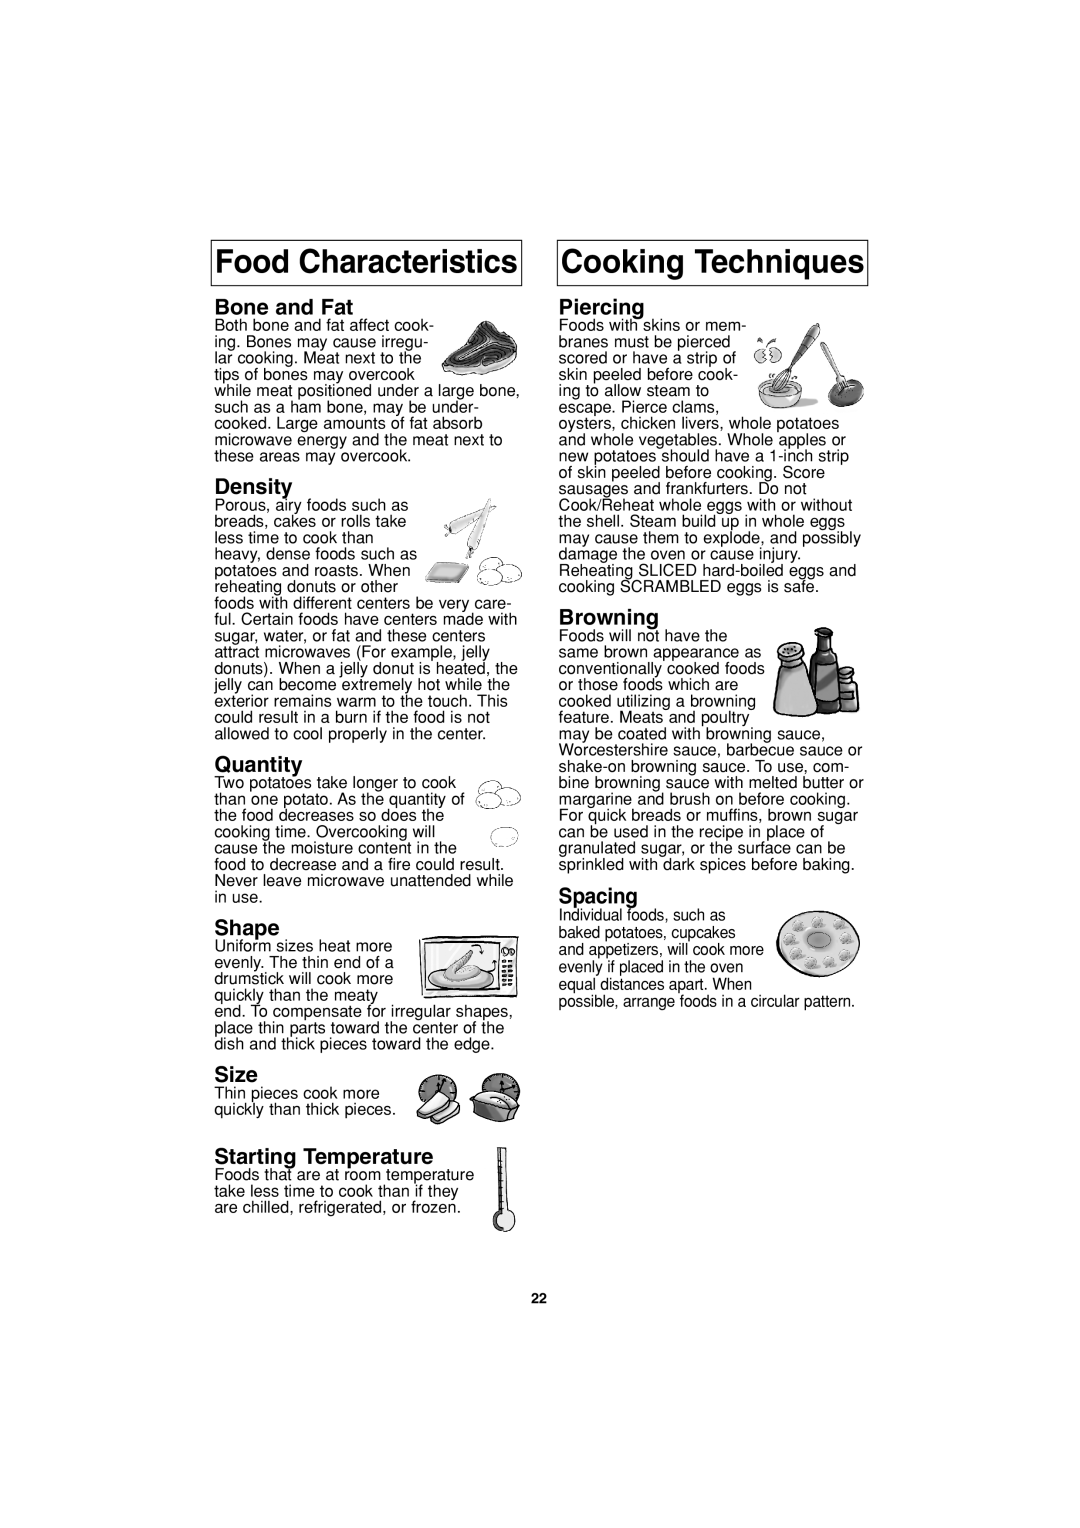 Panasonic NN-T793 Food Characteristics, Cooking Techniques, Bone and Fat, Density, Quantity, Shape, Size, Piercing 